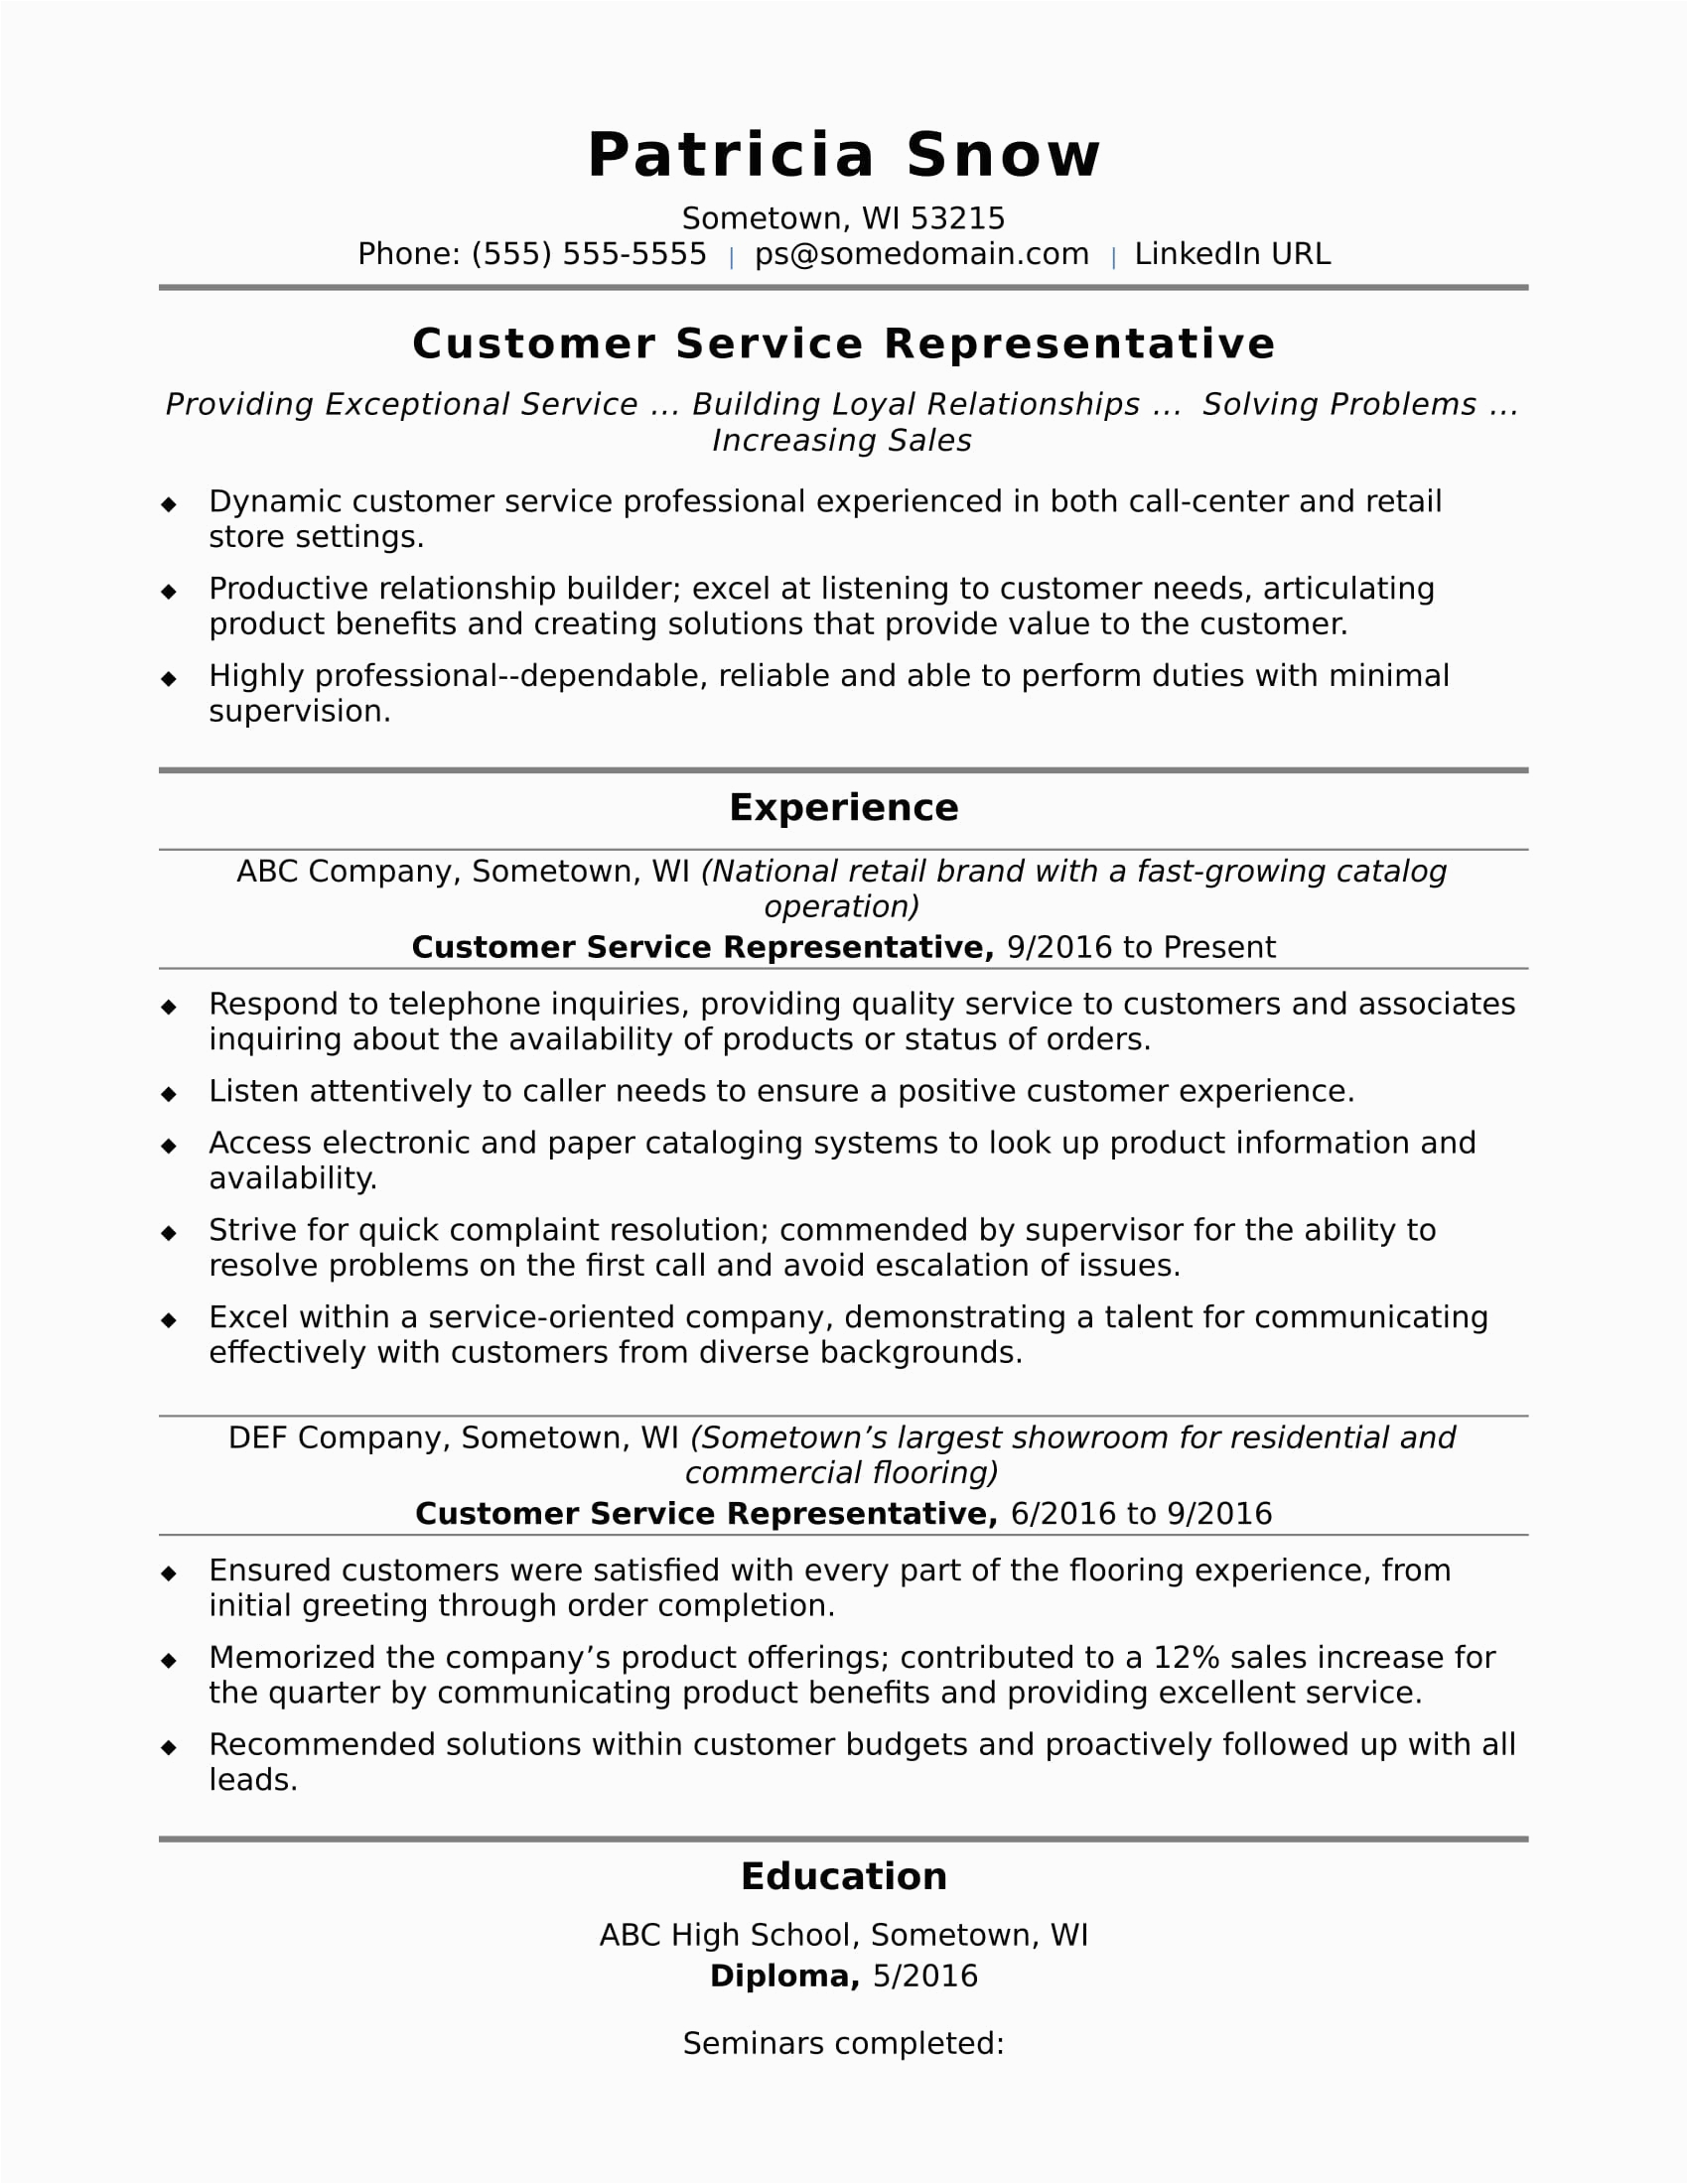 Sample Resume for Airline Customer Service Representative Customer Service Representative Resume Sample